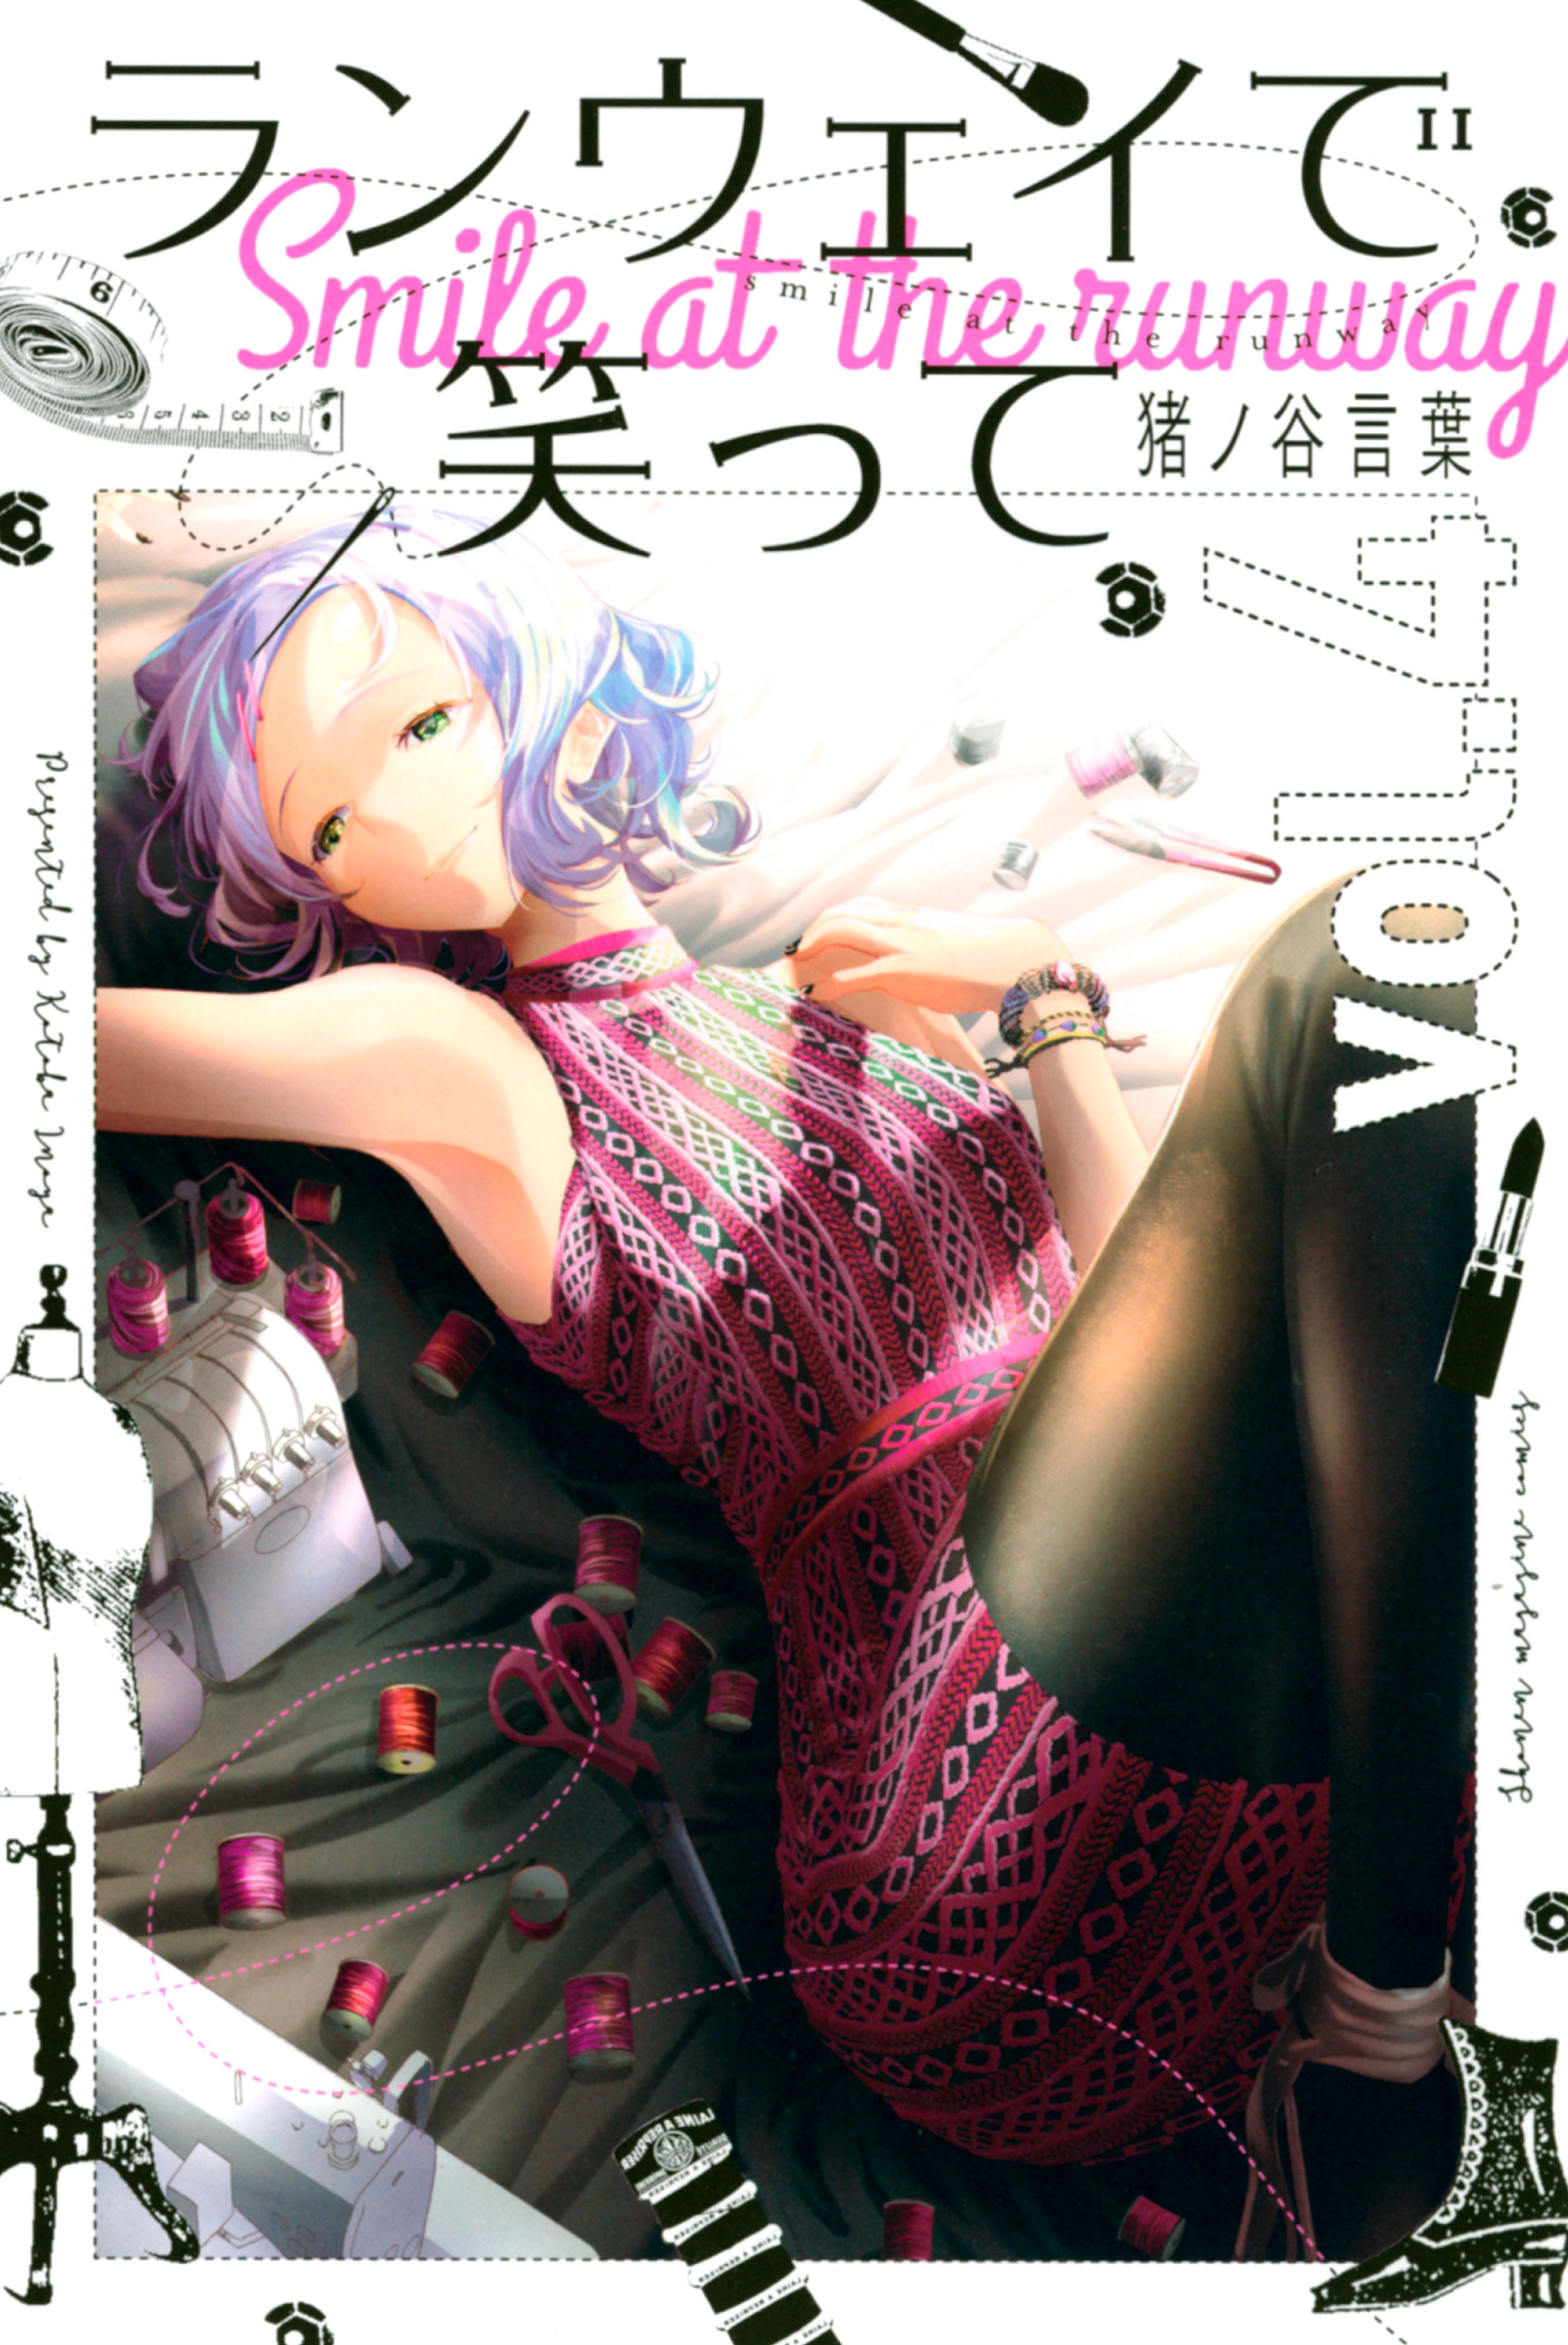 Shonen Magazine News on X: Runway de Waratte volume 19 cover